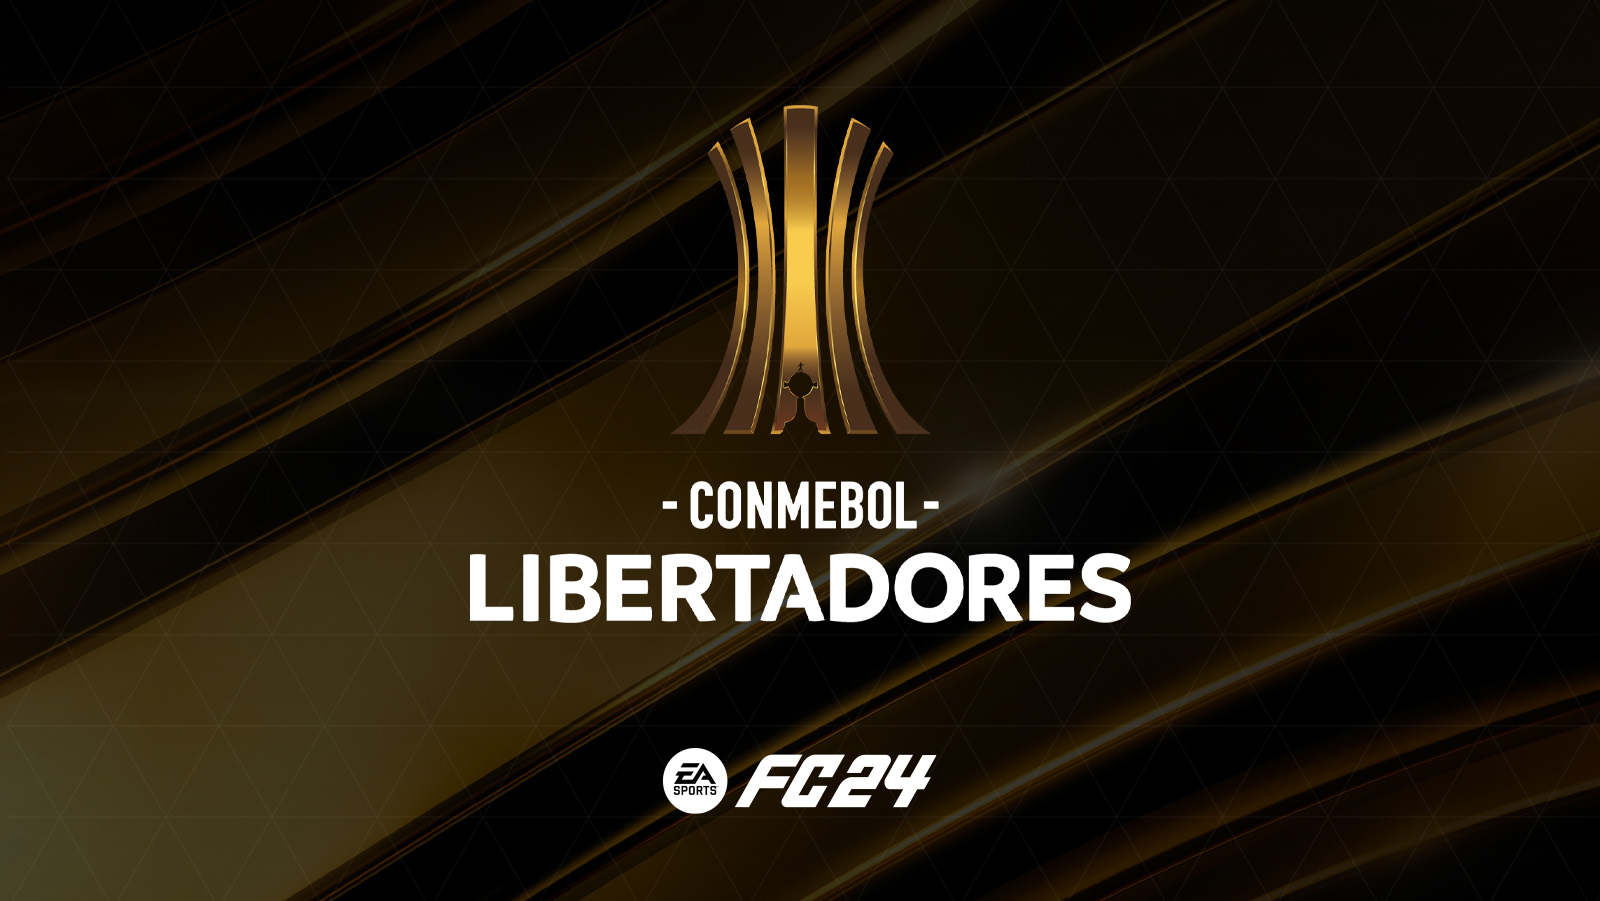 FC 24 CONMEBOL Libertadores